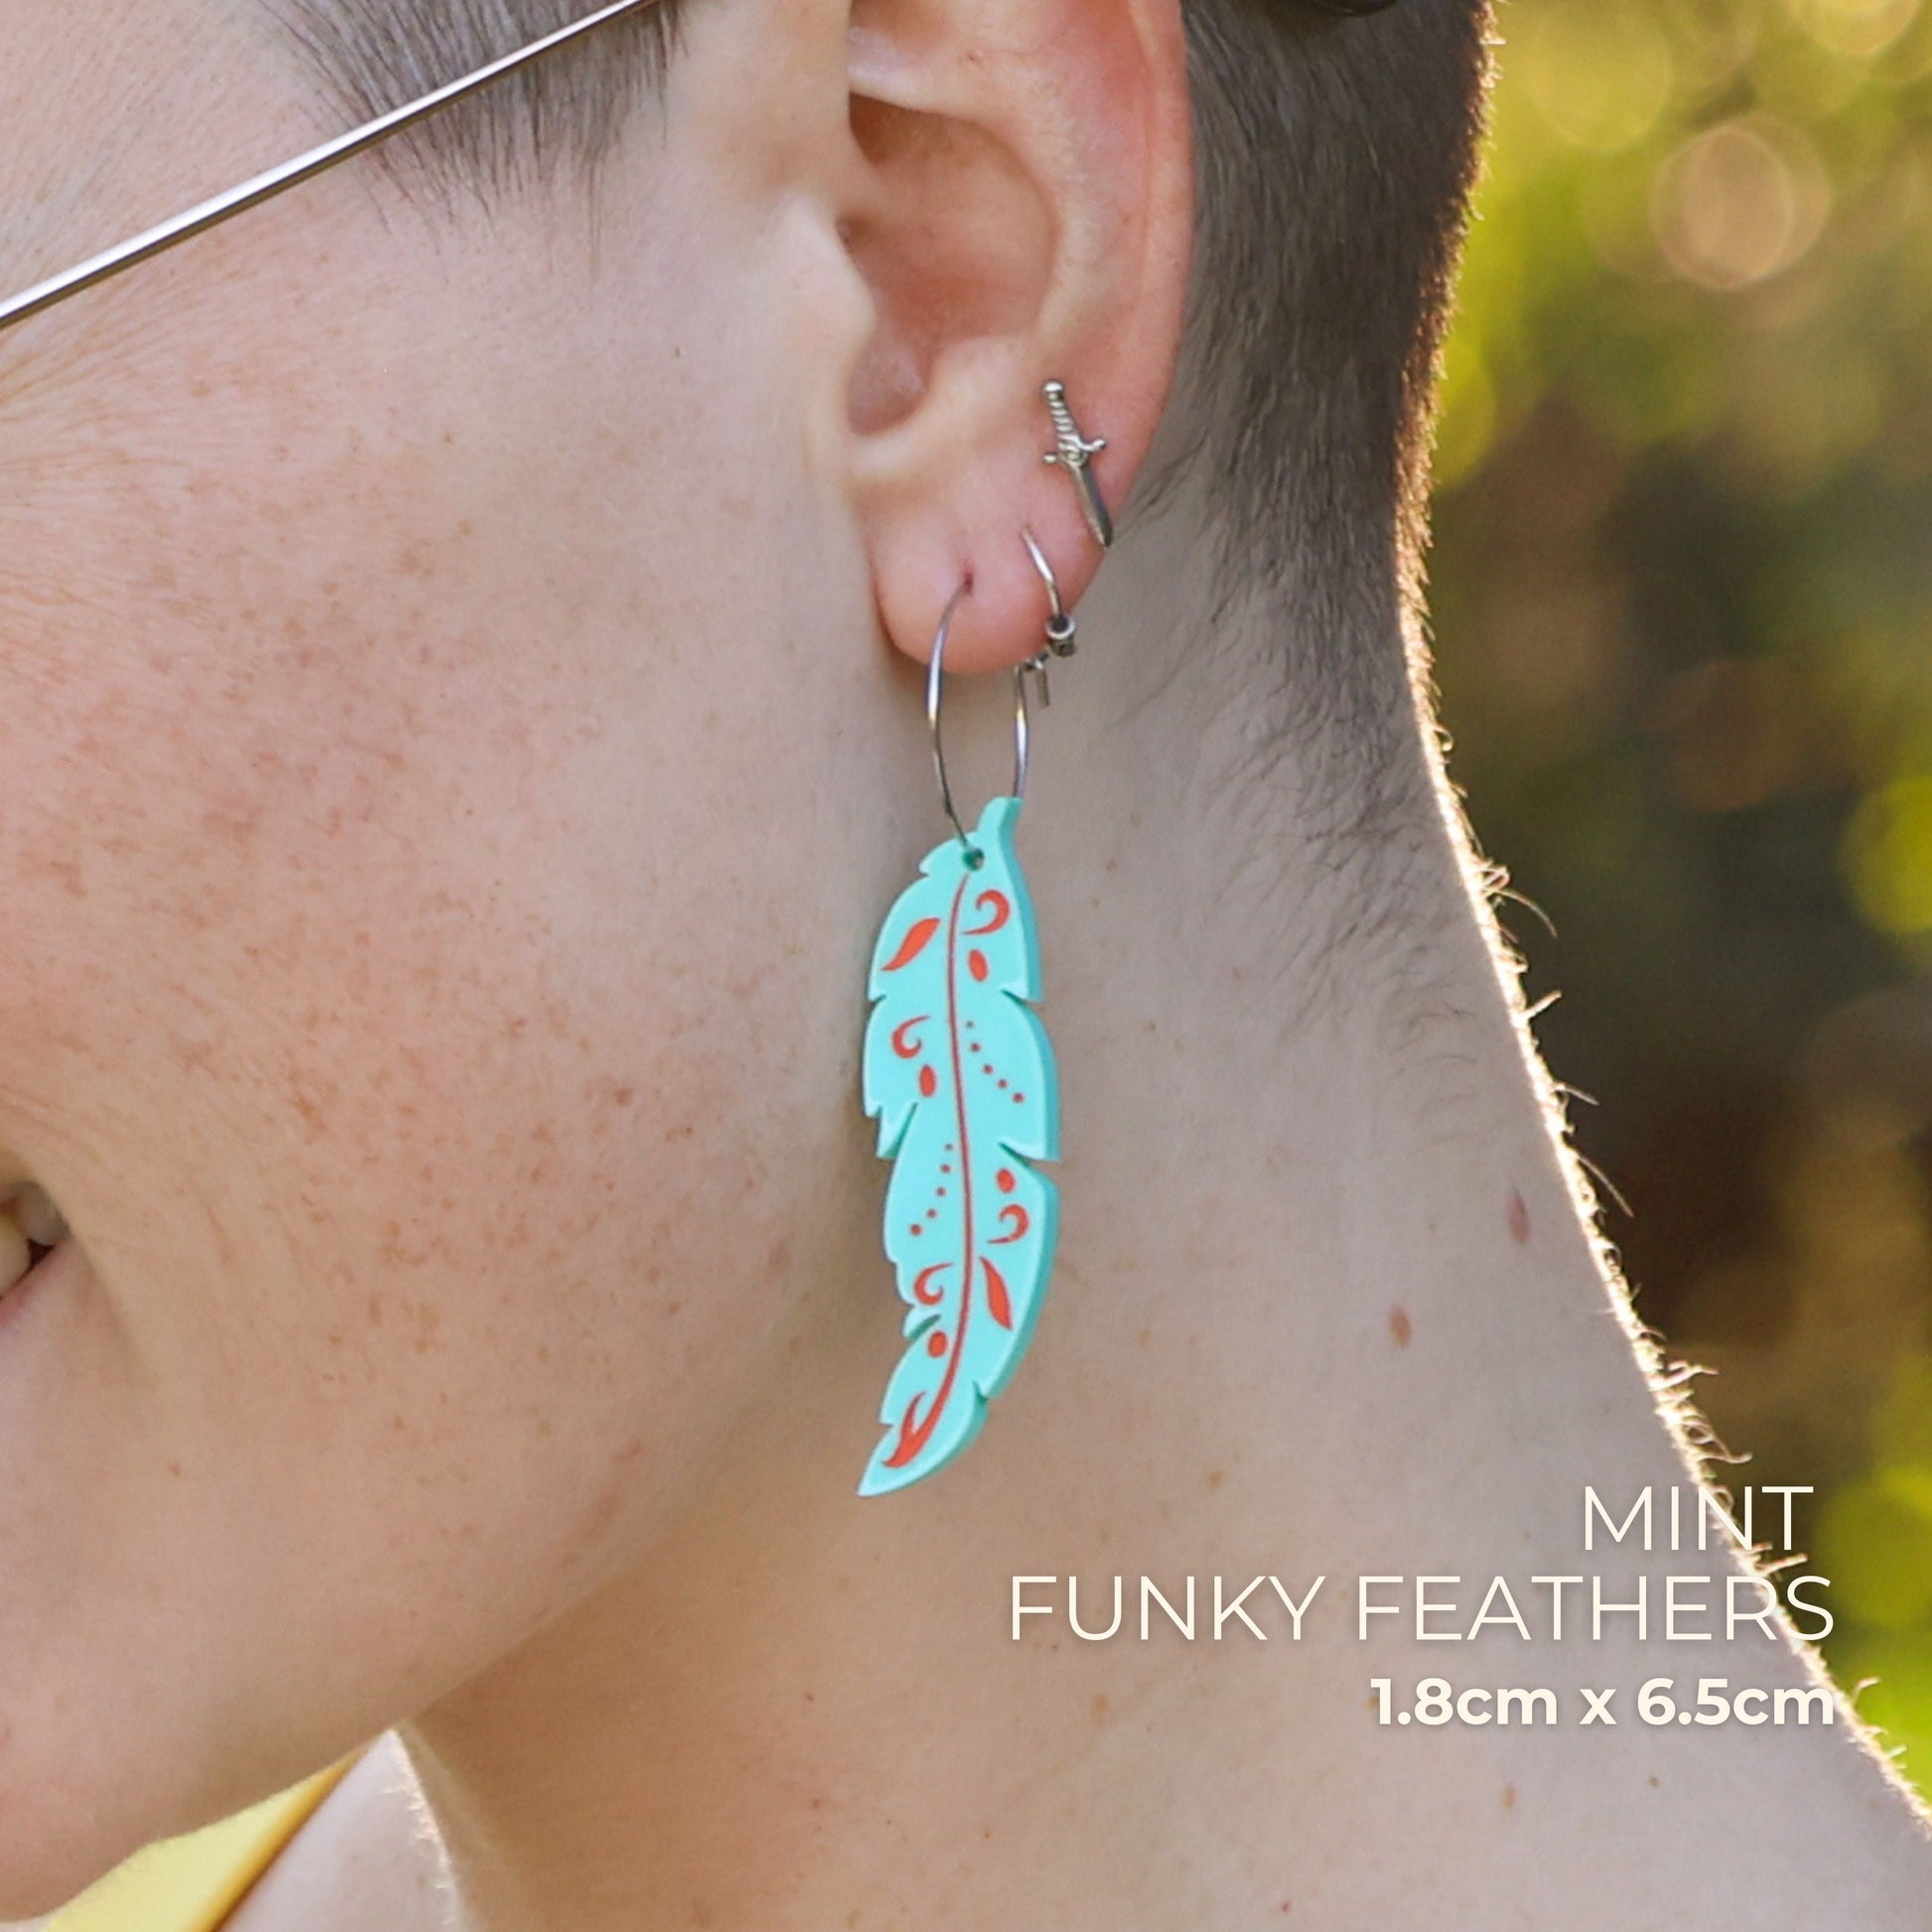 BINKABU Funky Feathers - Mint handmade acrylic bird earrings